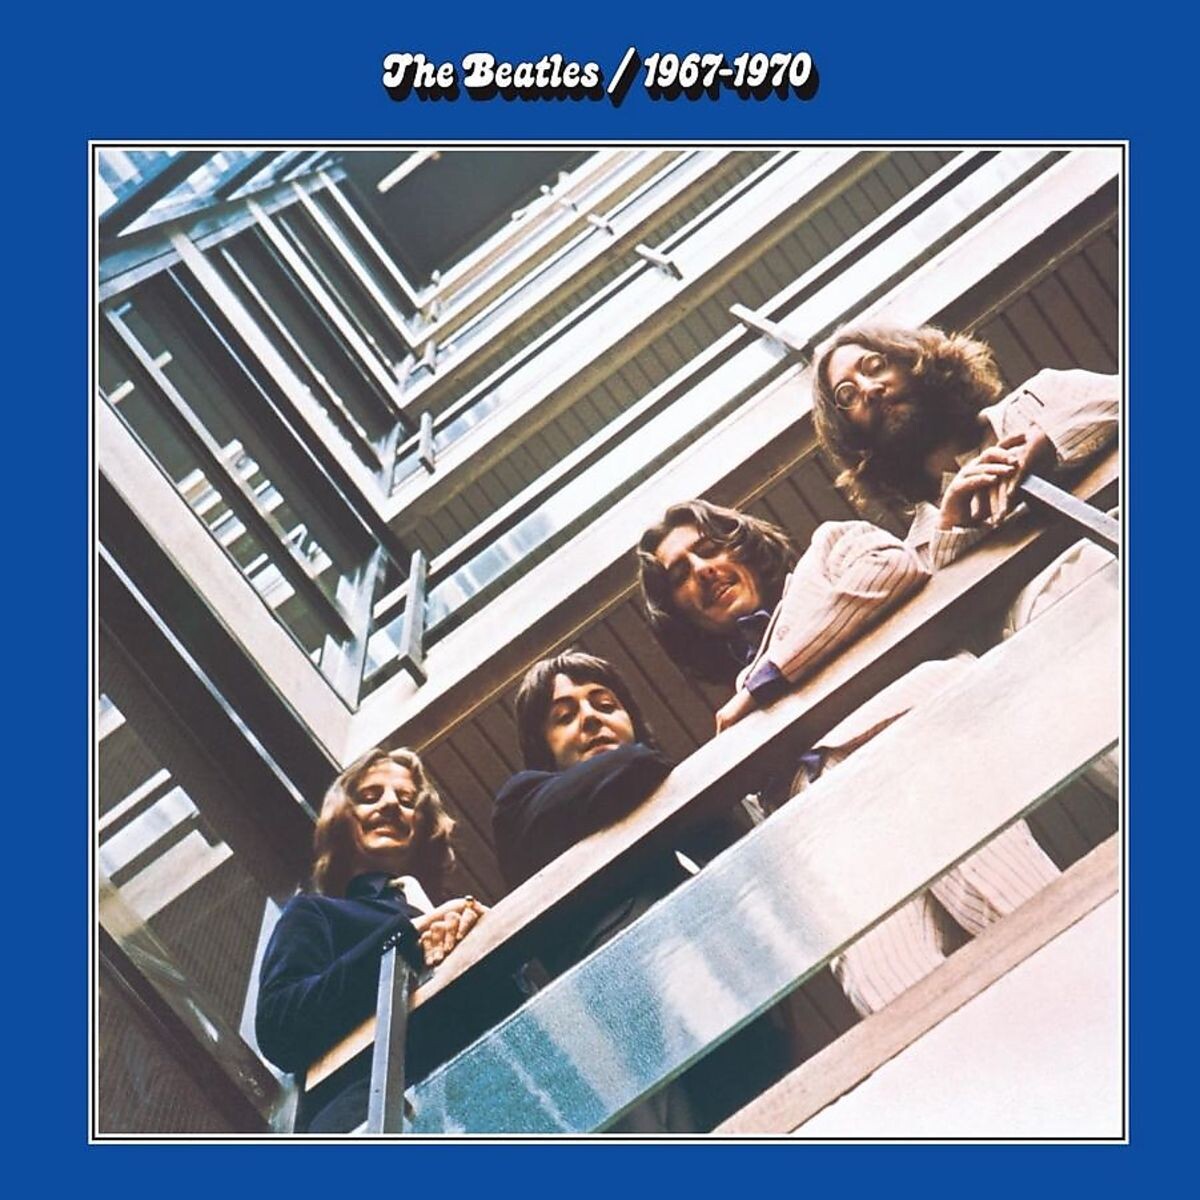 https://images.bravado.de/prod/product-assets/beatles-the/the-beatles-international-1/products/142365/web/309004/image-thumb__309004__3000x3000_original/The-Beatles-1967-1970-Blue-Vinyl-142365-309004.a6f0d2ef.jpg